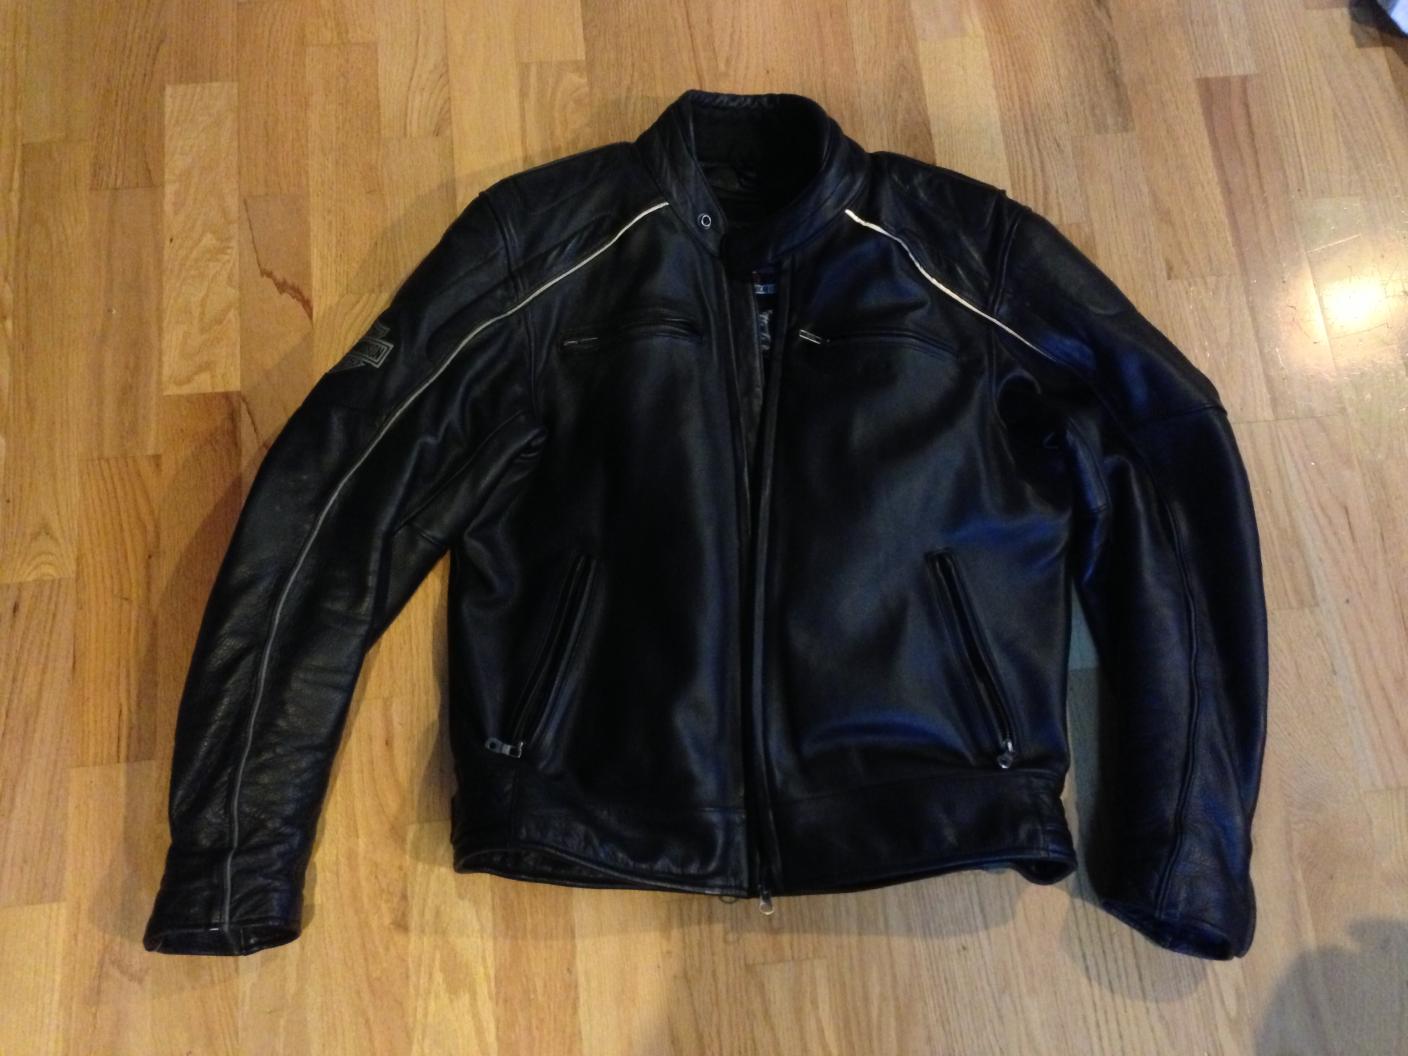 Harley Leather Jacket size Medium $100 - Harley Davidson Forums